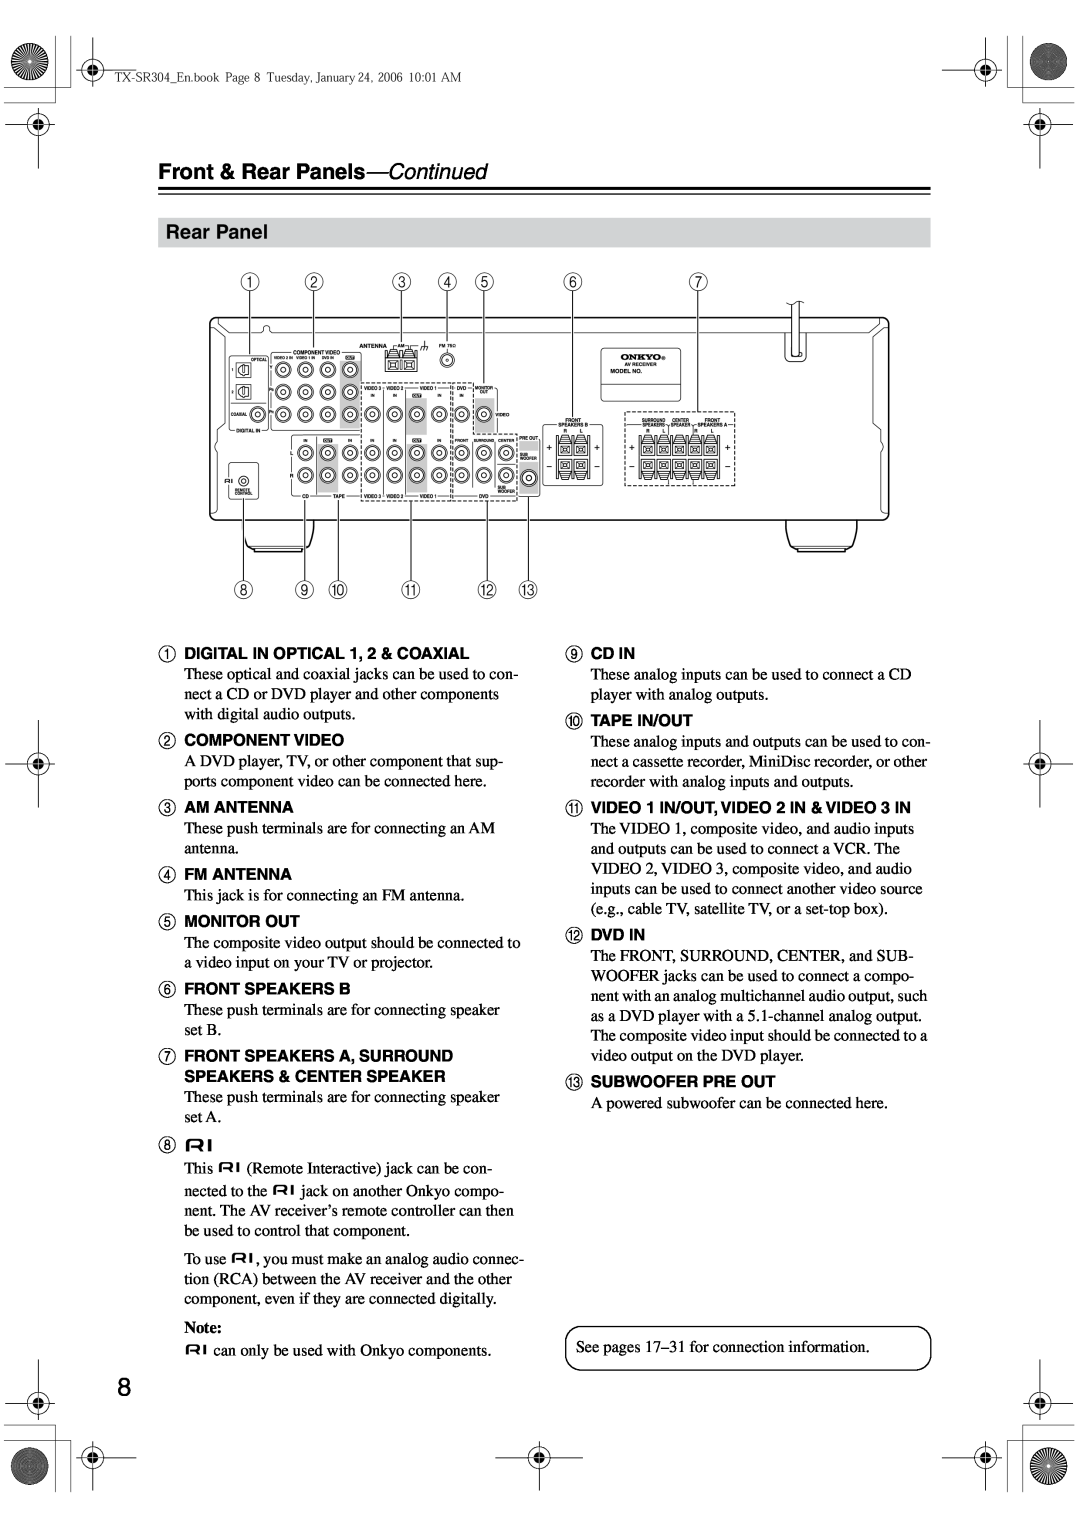 Onkyo TX-SR304E, TX-SR8440, TX-SR404 instruction manual 8 9 J K L M, Front & Rear Panels-Continued 